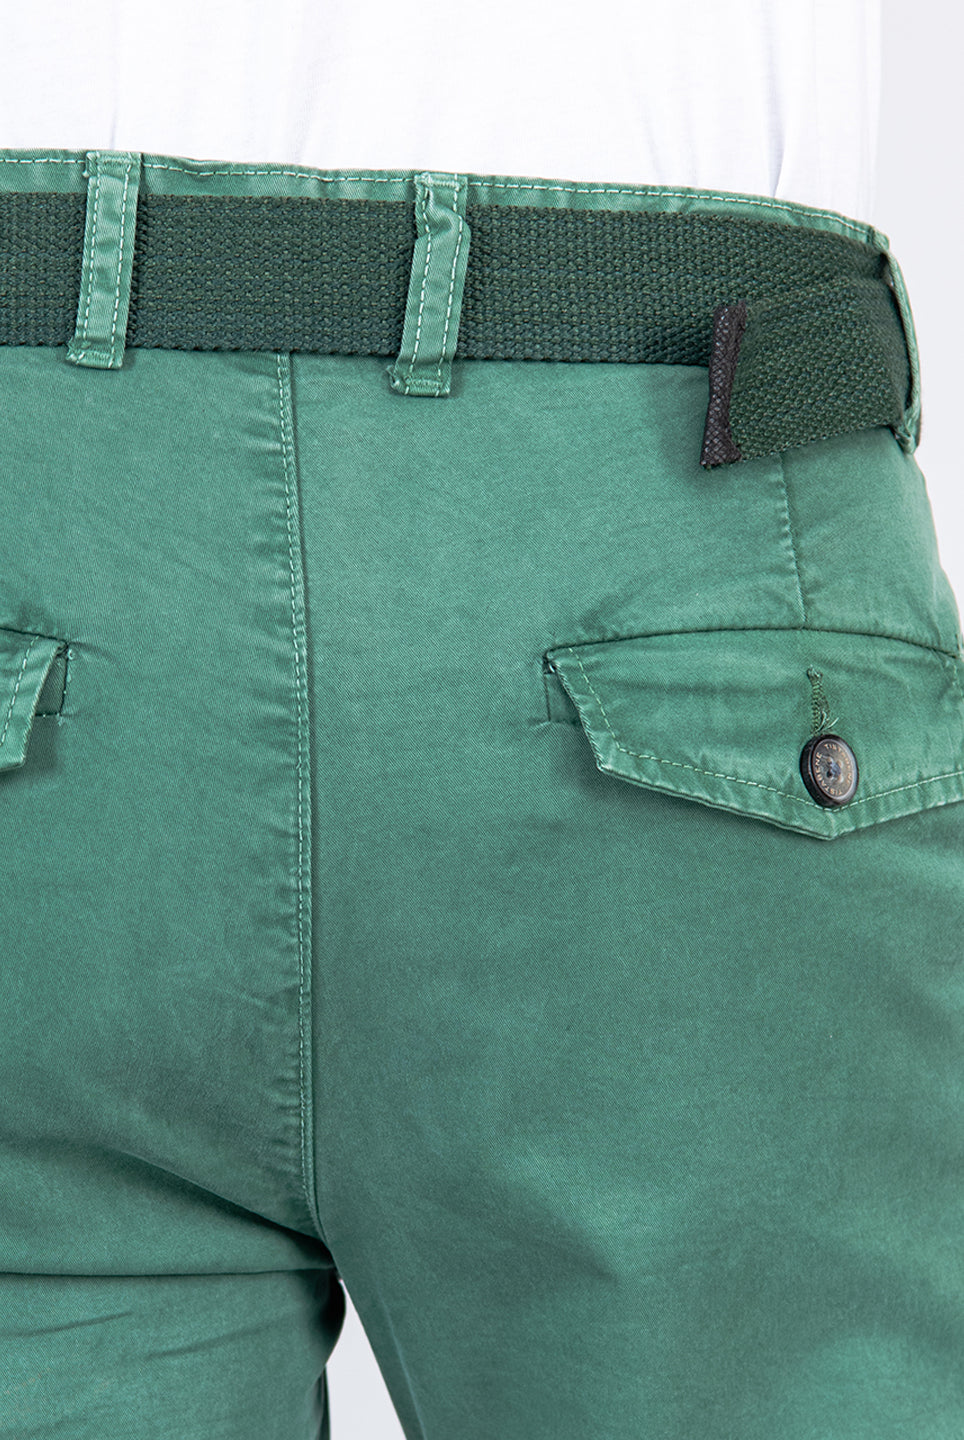 green gap twill cotton cargo pants